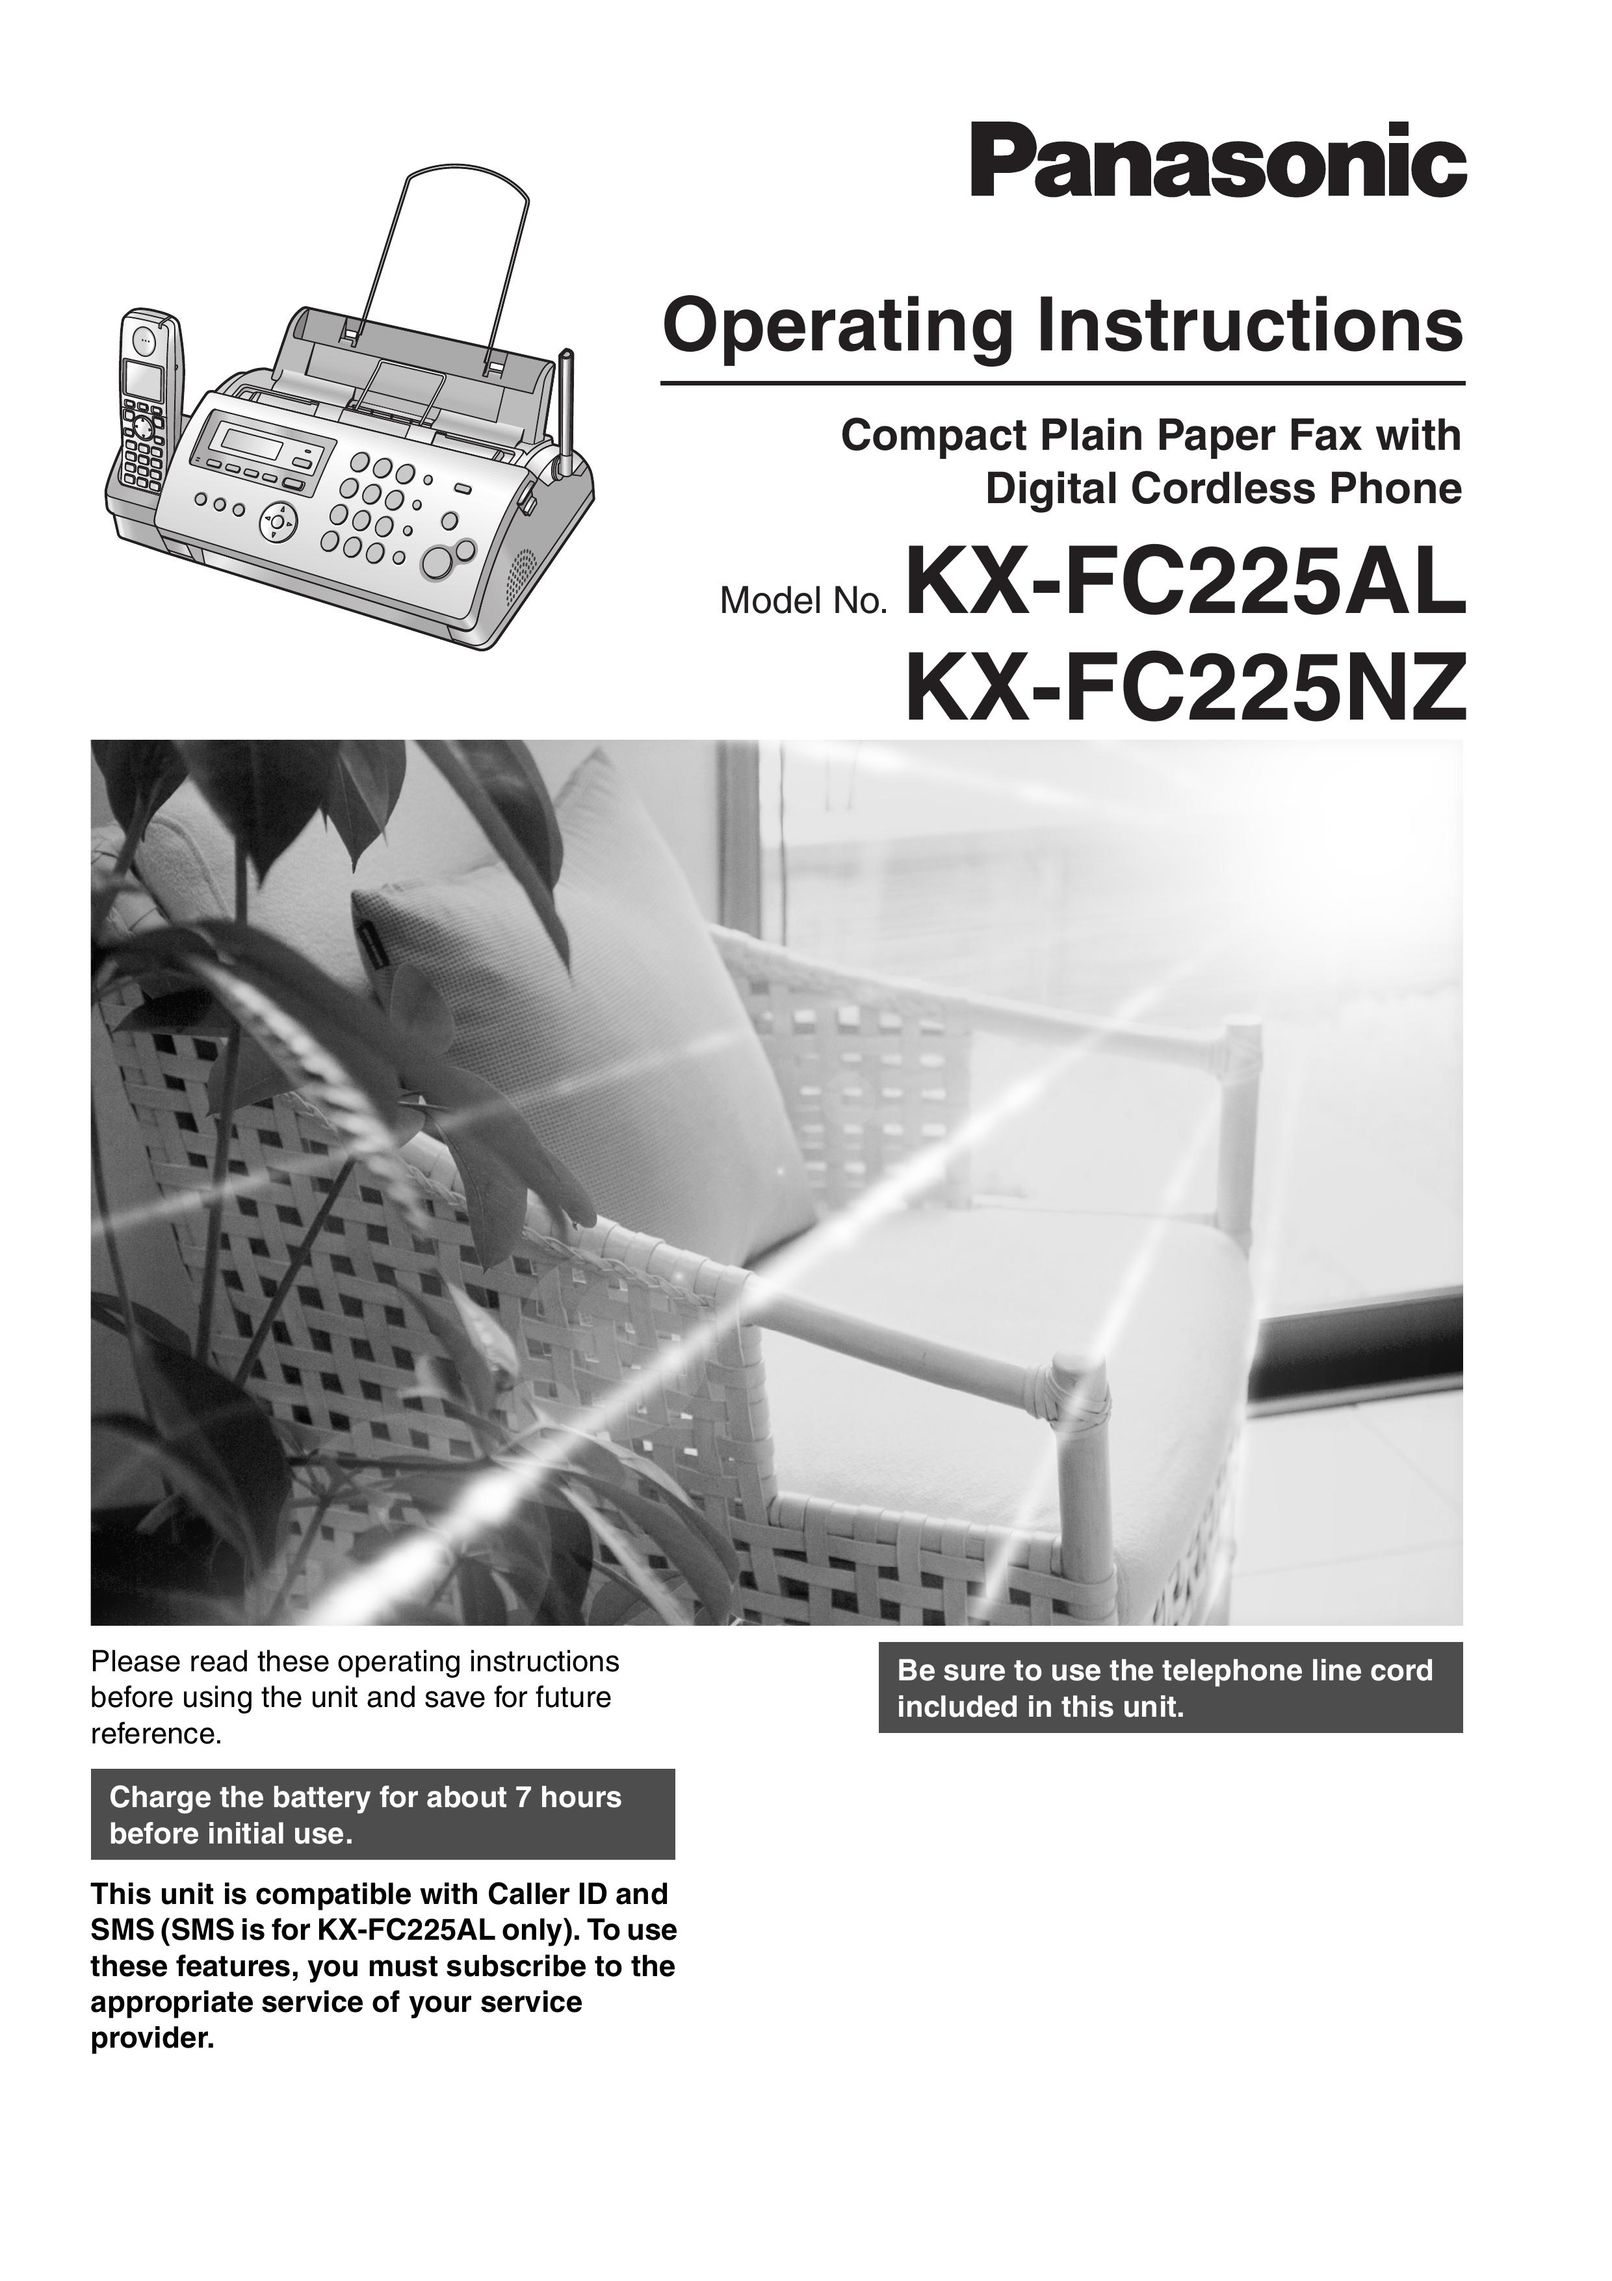 Panasonic KX-FC225AL Fax Machine User Manual